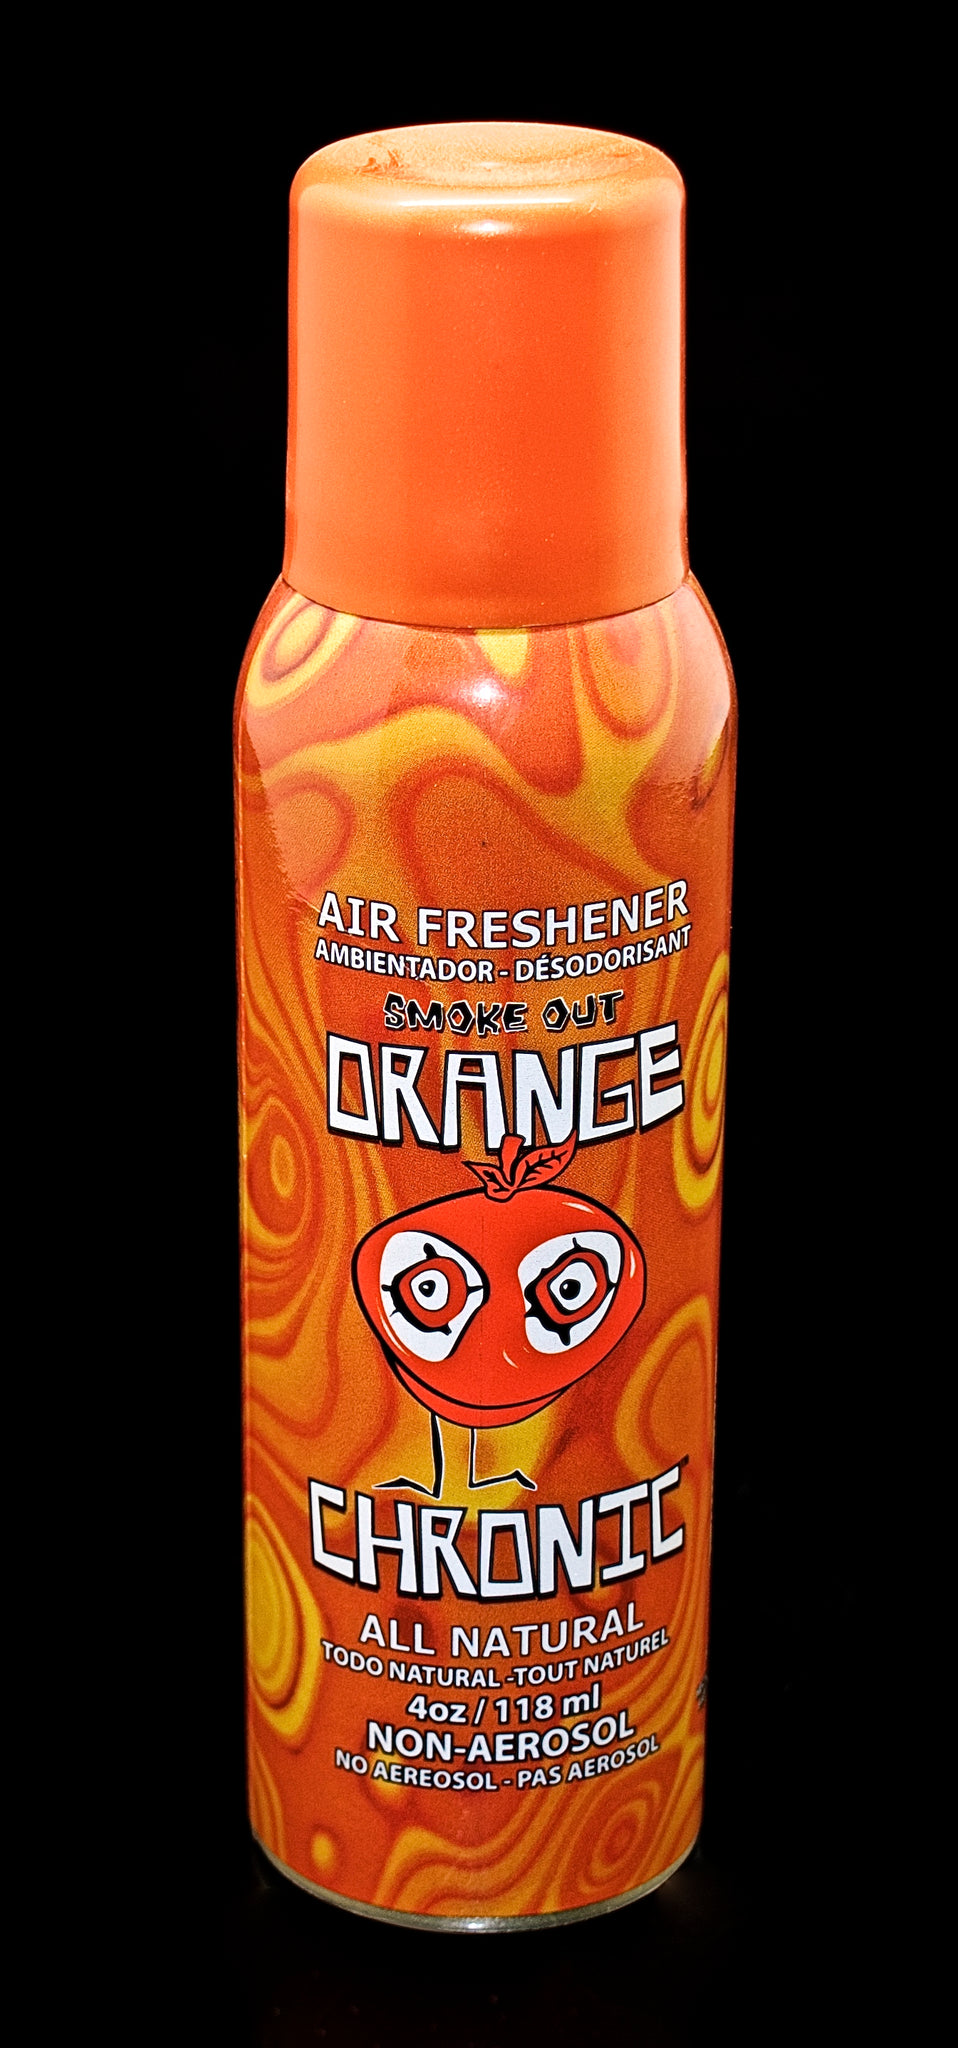 AIr Freshener | Smoke Out - Orange Chronic | All Natural - No Aerosol - 4oz  | Wholesale Glass Pipe  - 1656